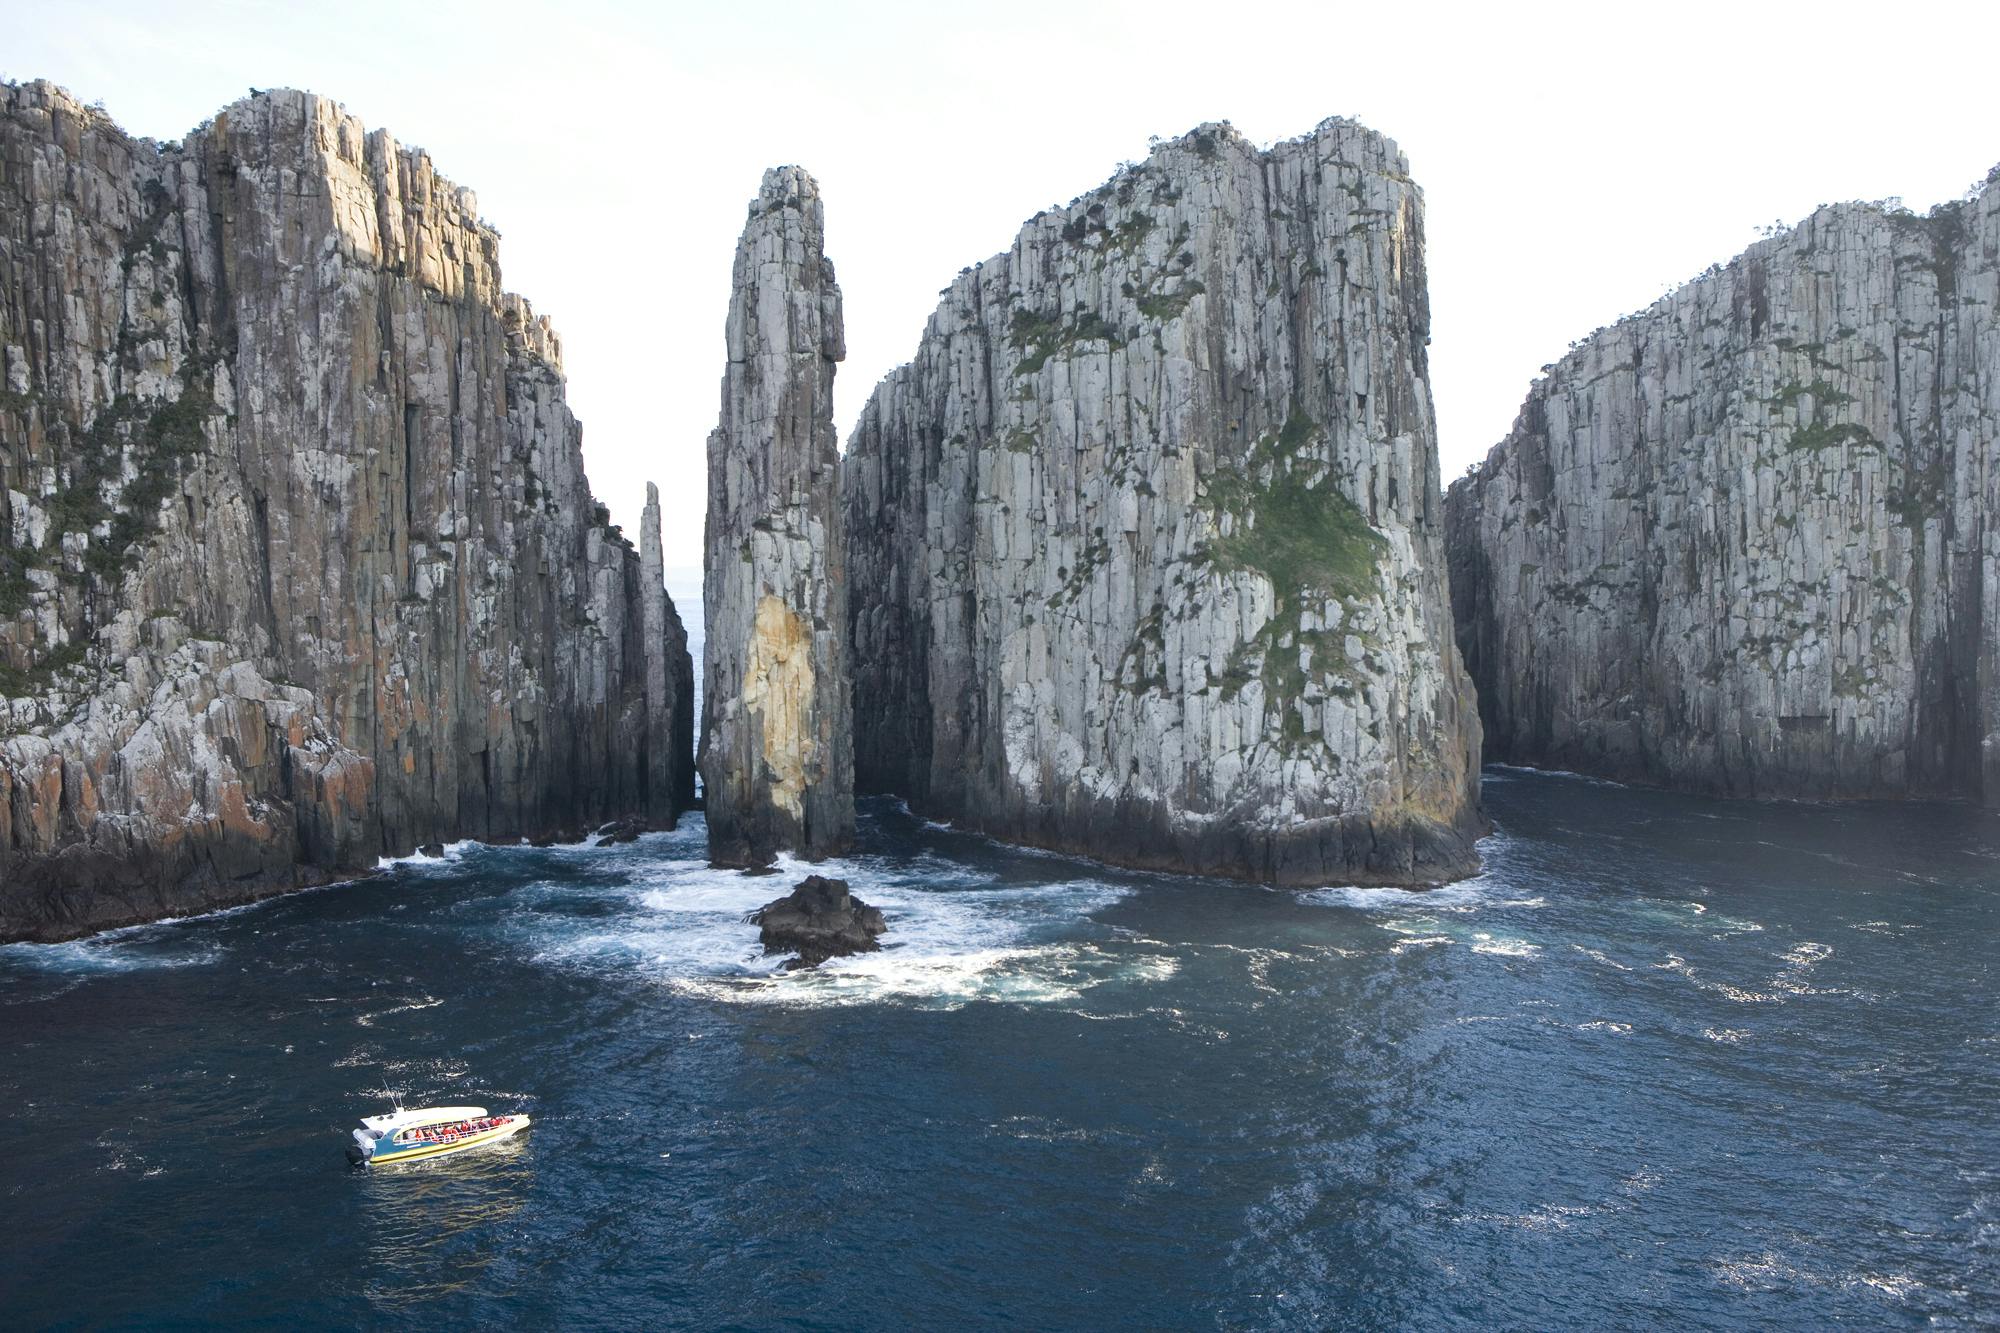 Tasman Island Cruises full day tour from Hobart